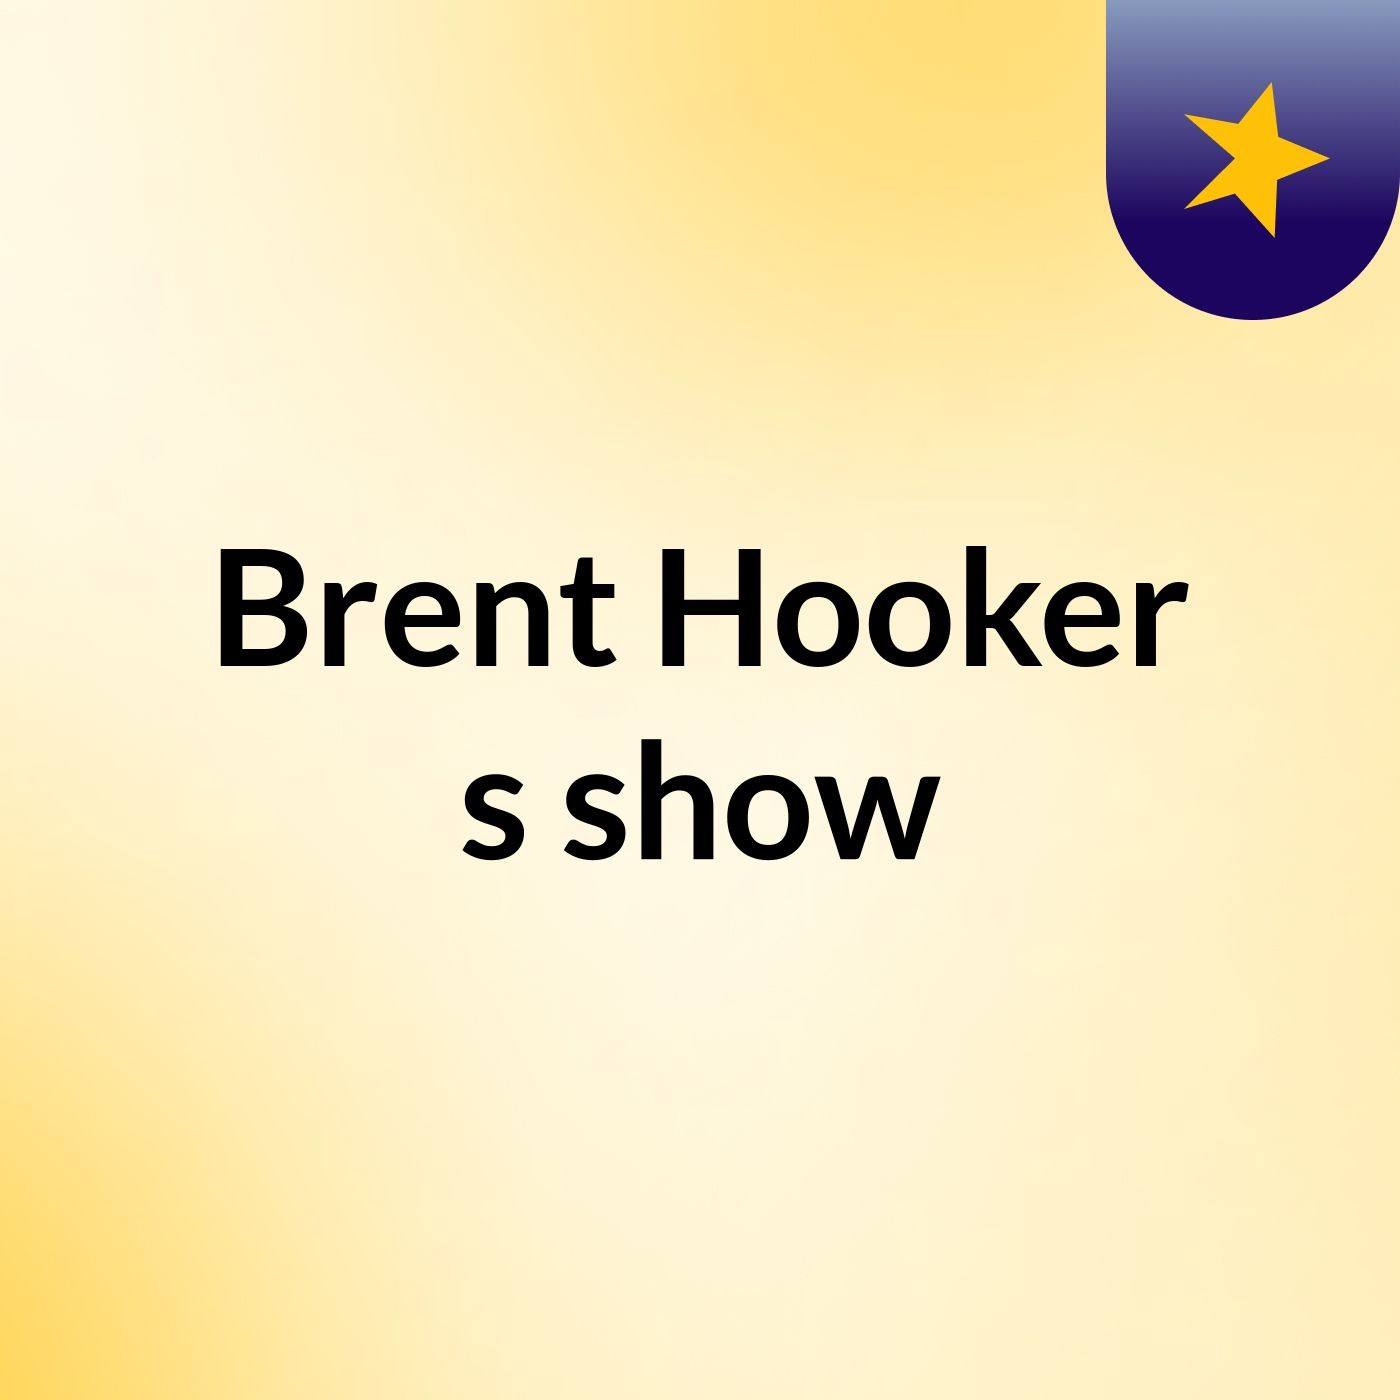 Episode 5 - Brent Hooker's show